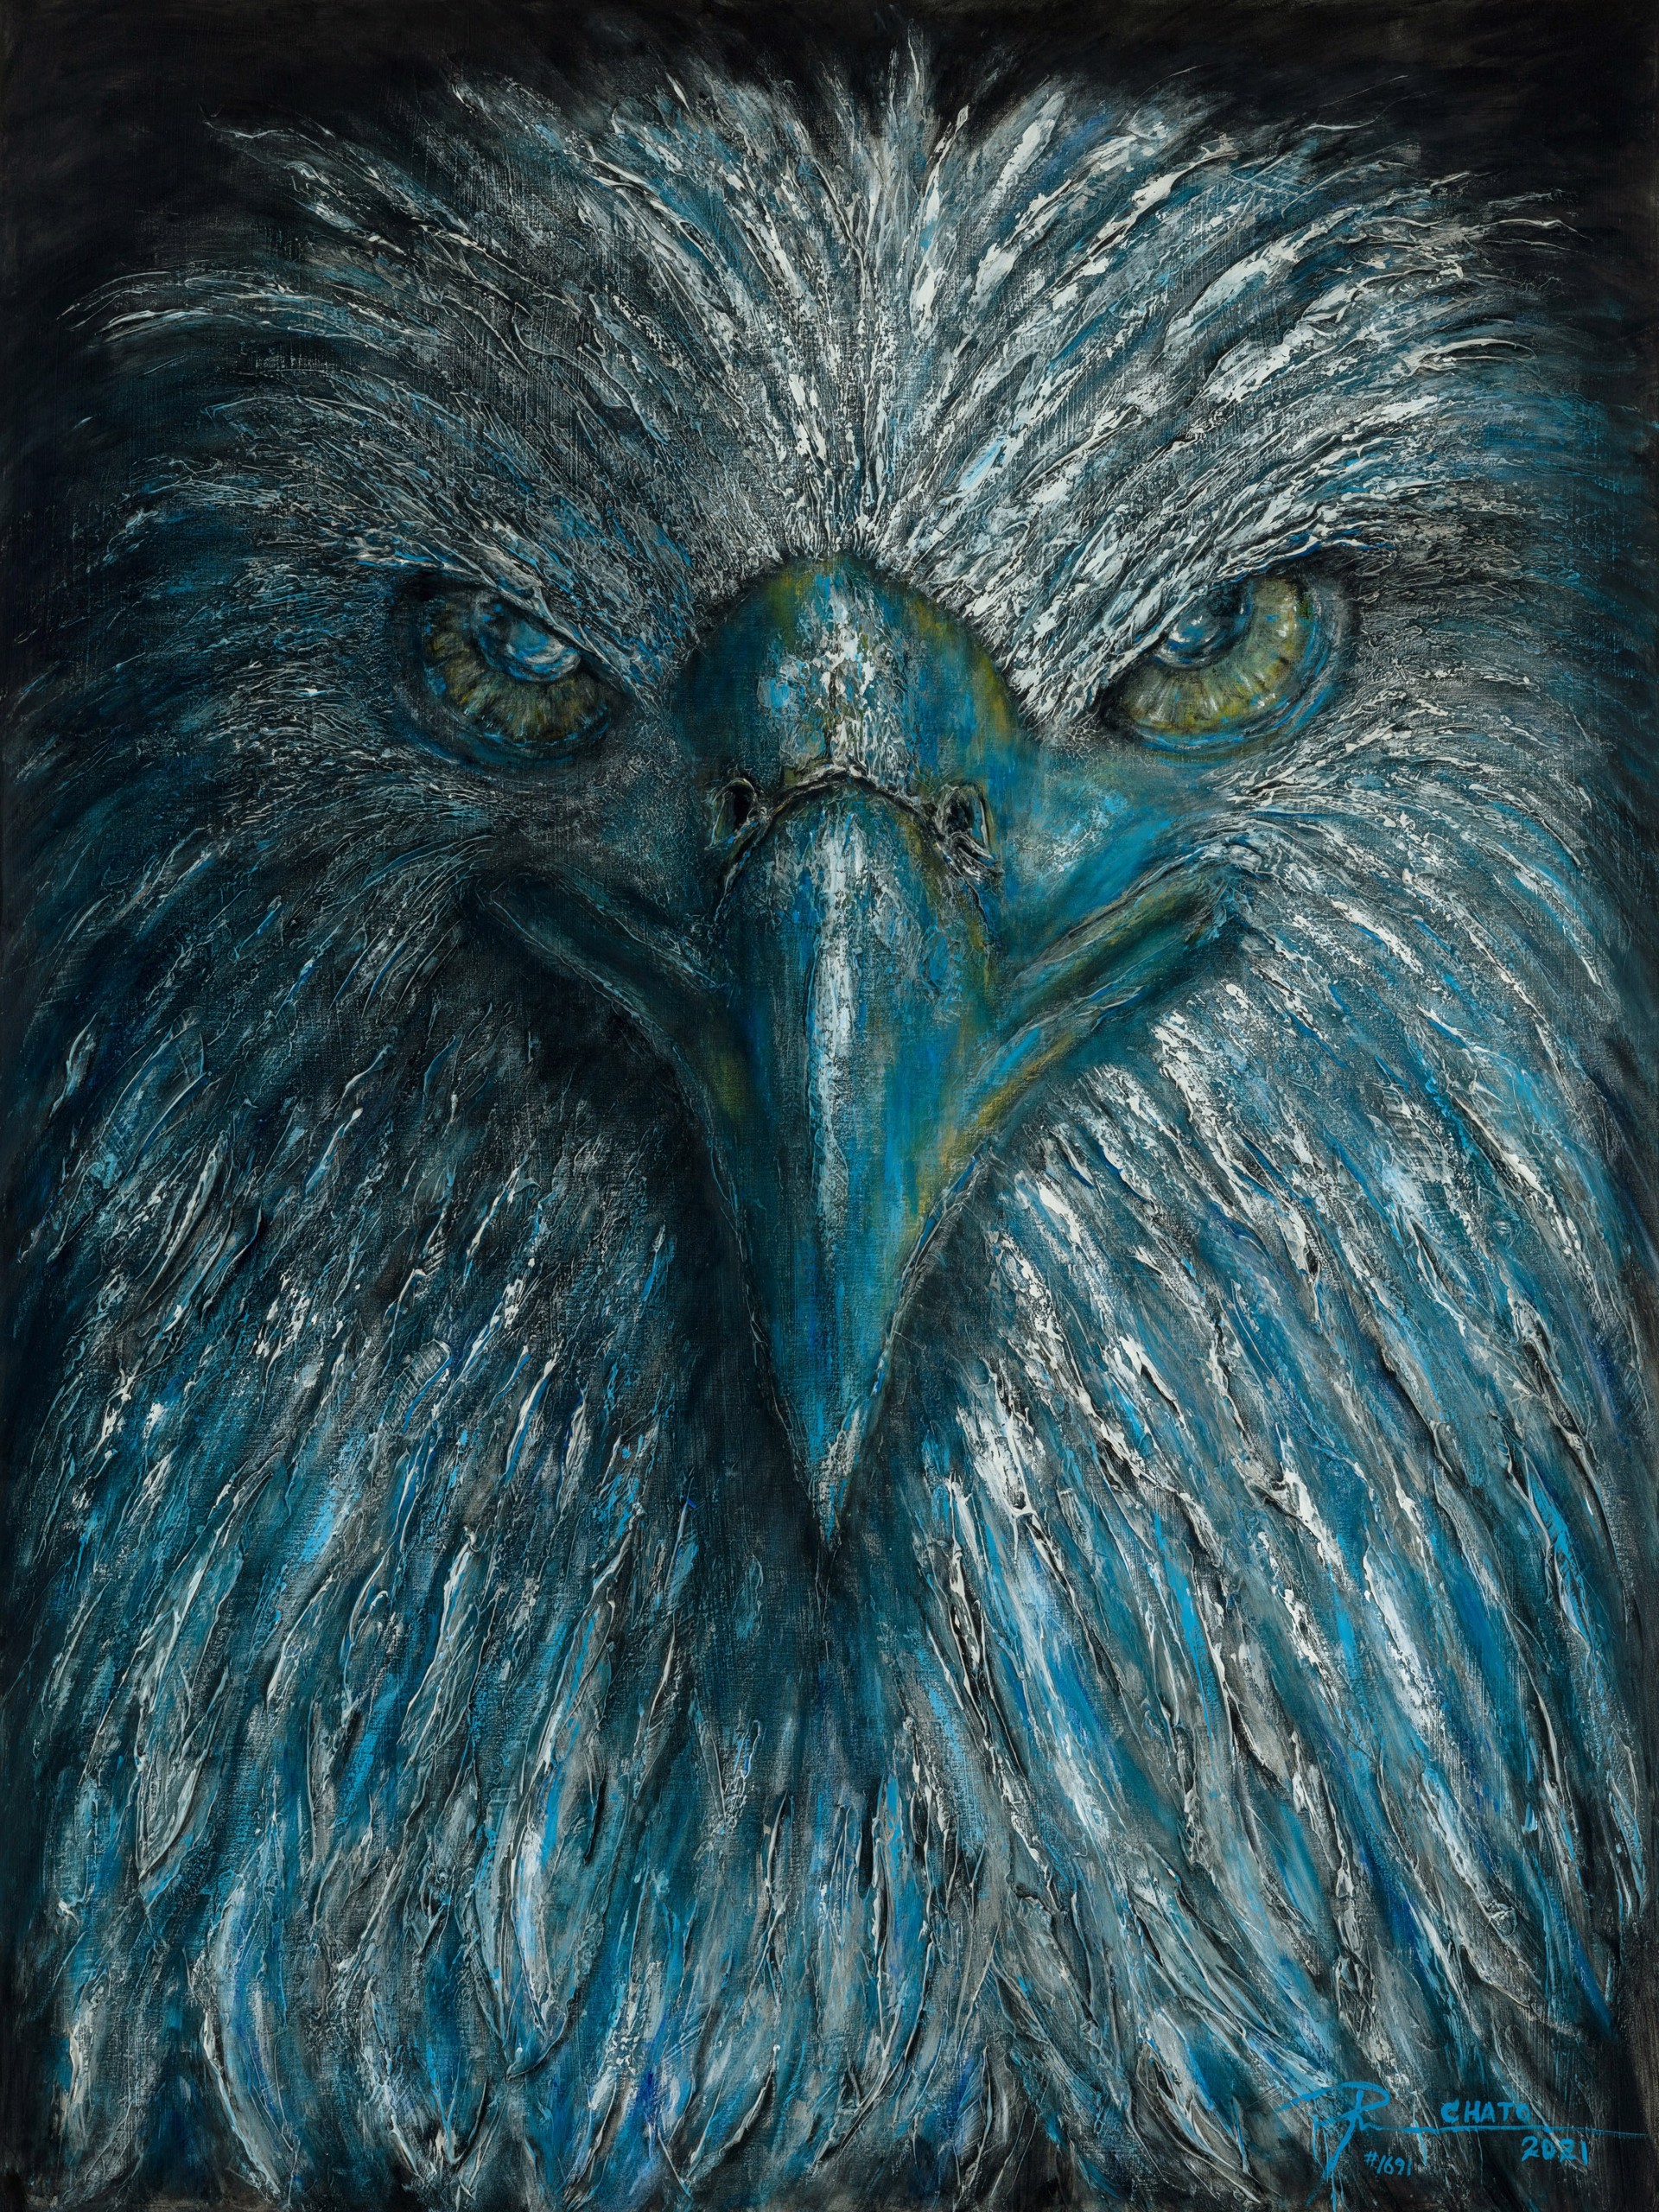 Blue Eagle by Ruben Chato